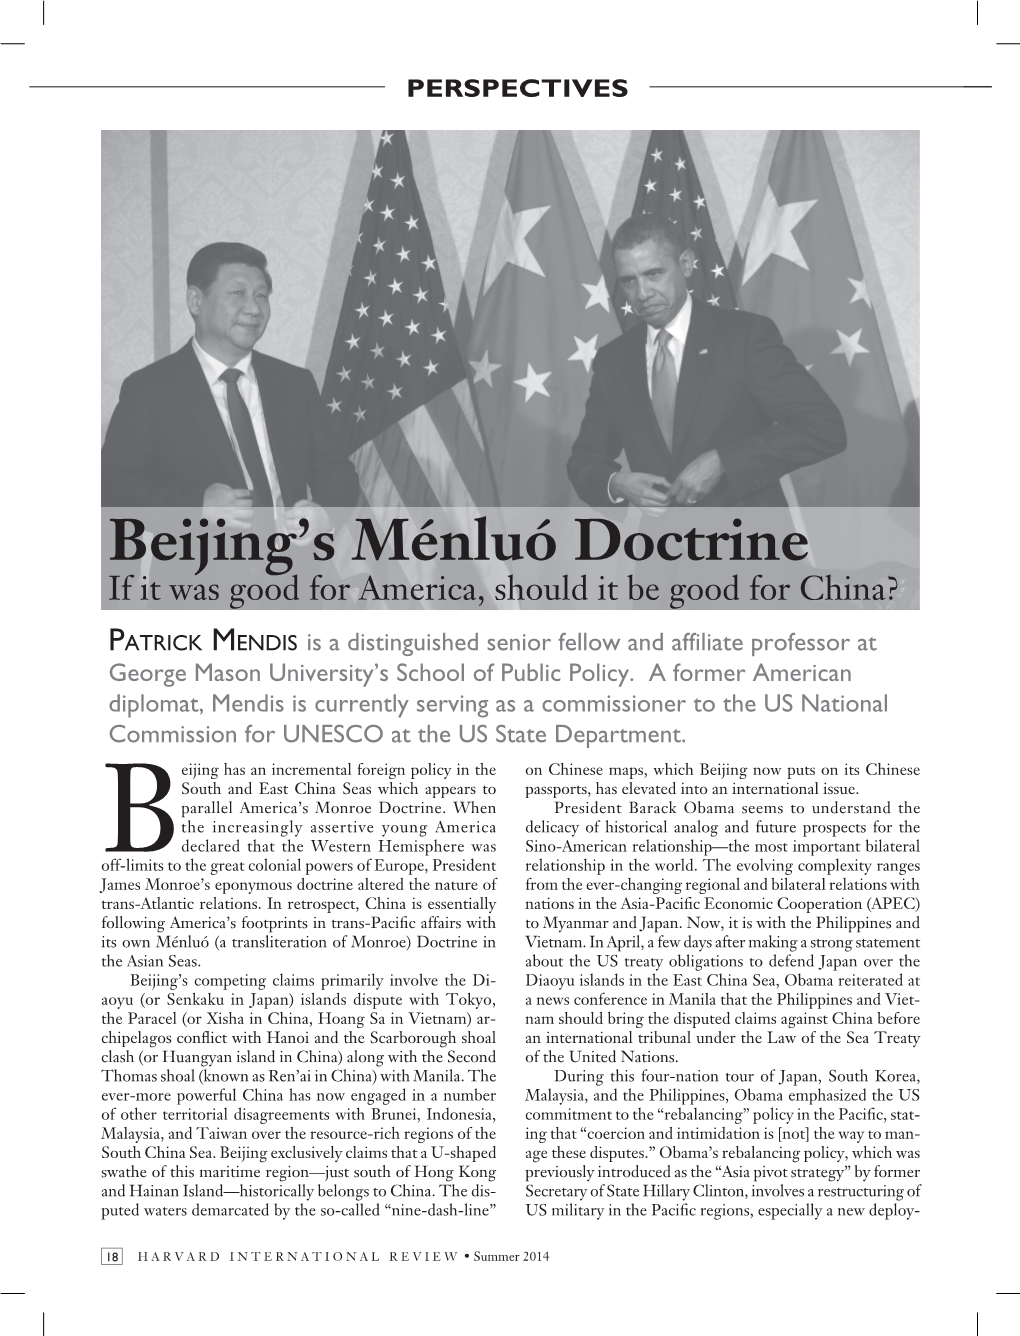 Beijing's Ménluó Doctrine